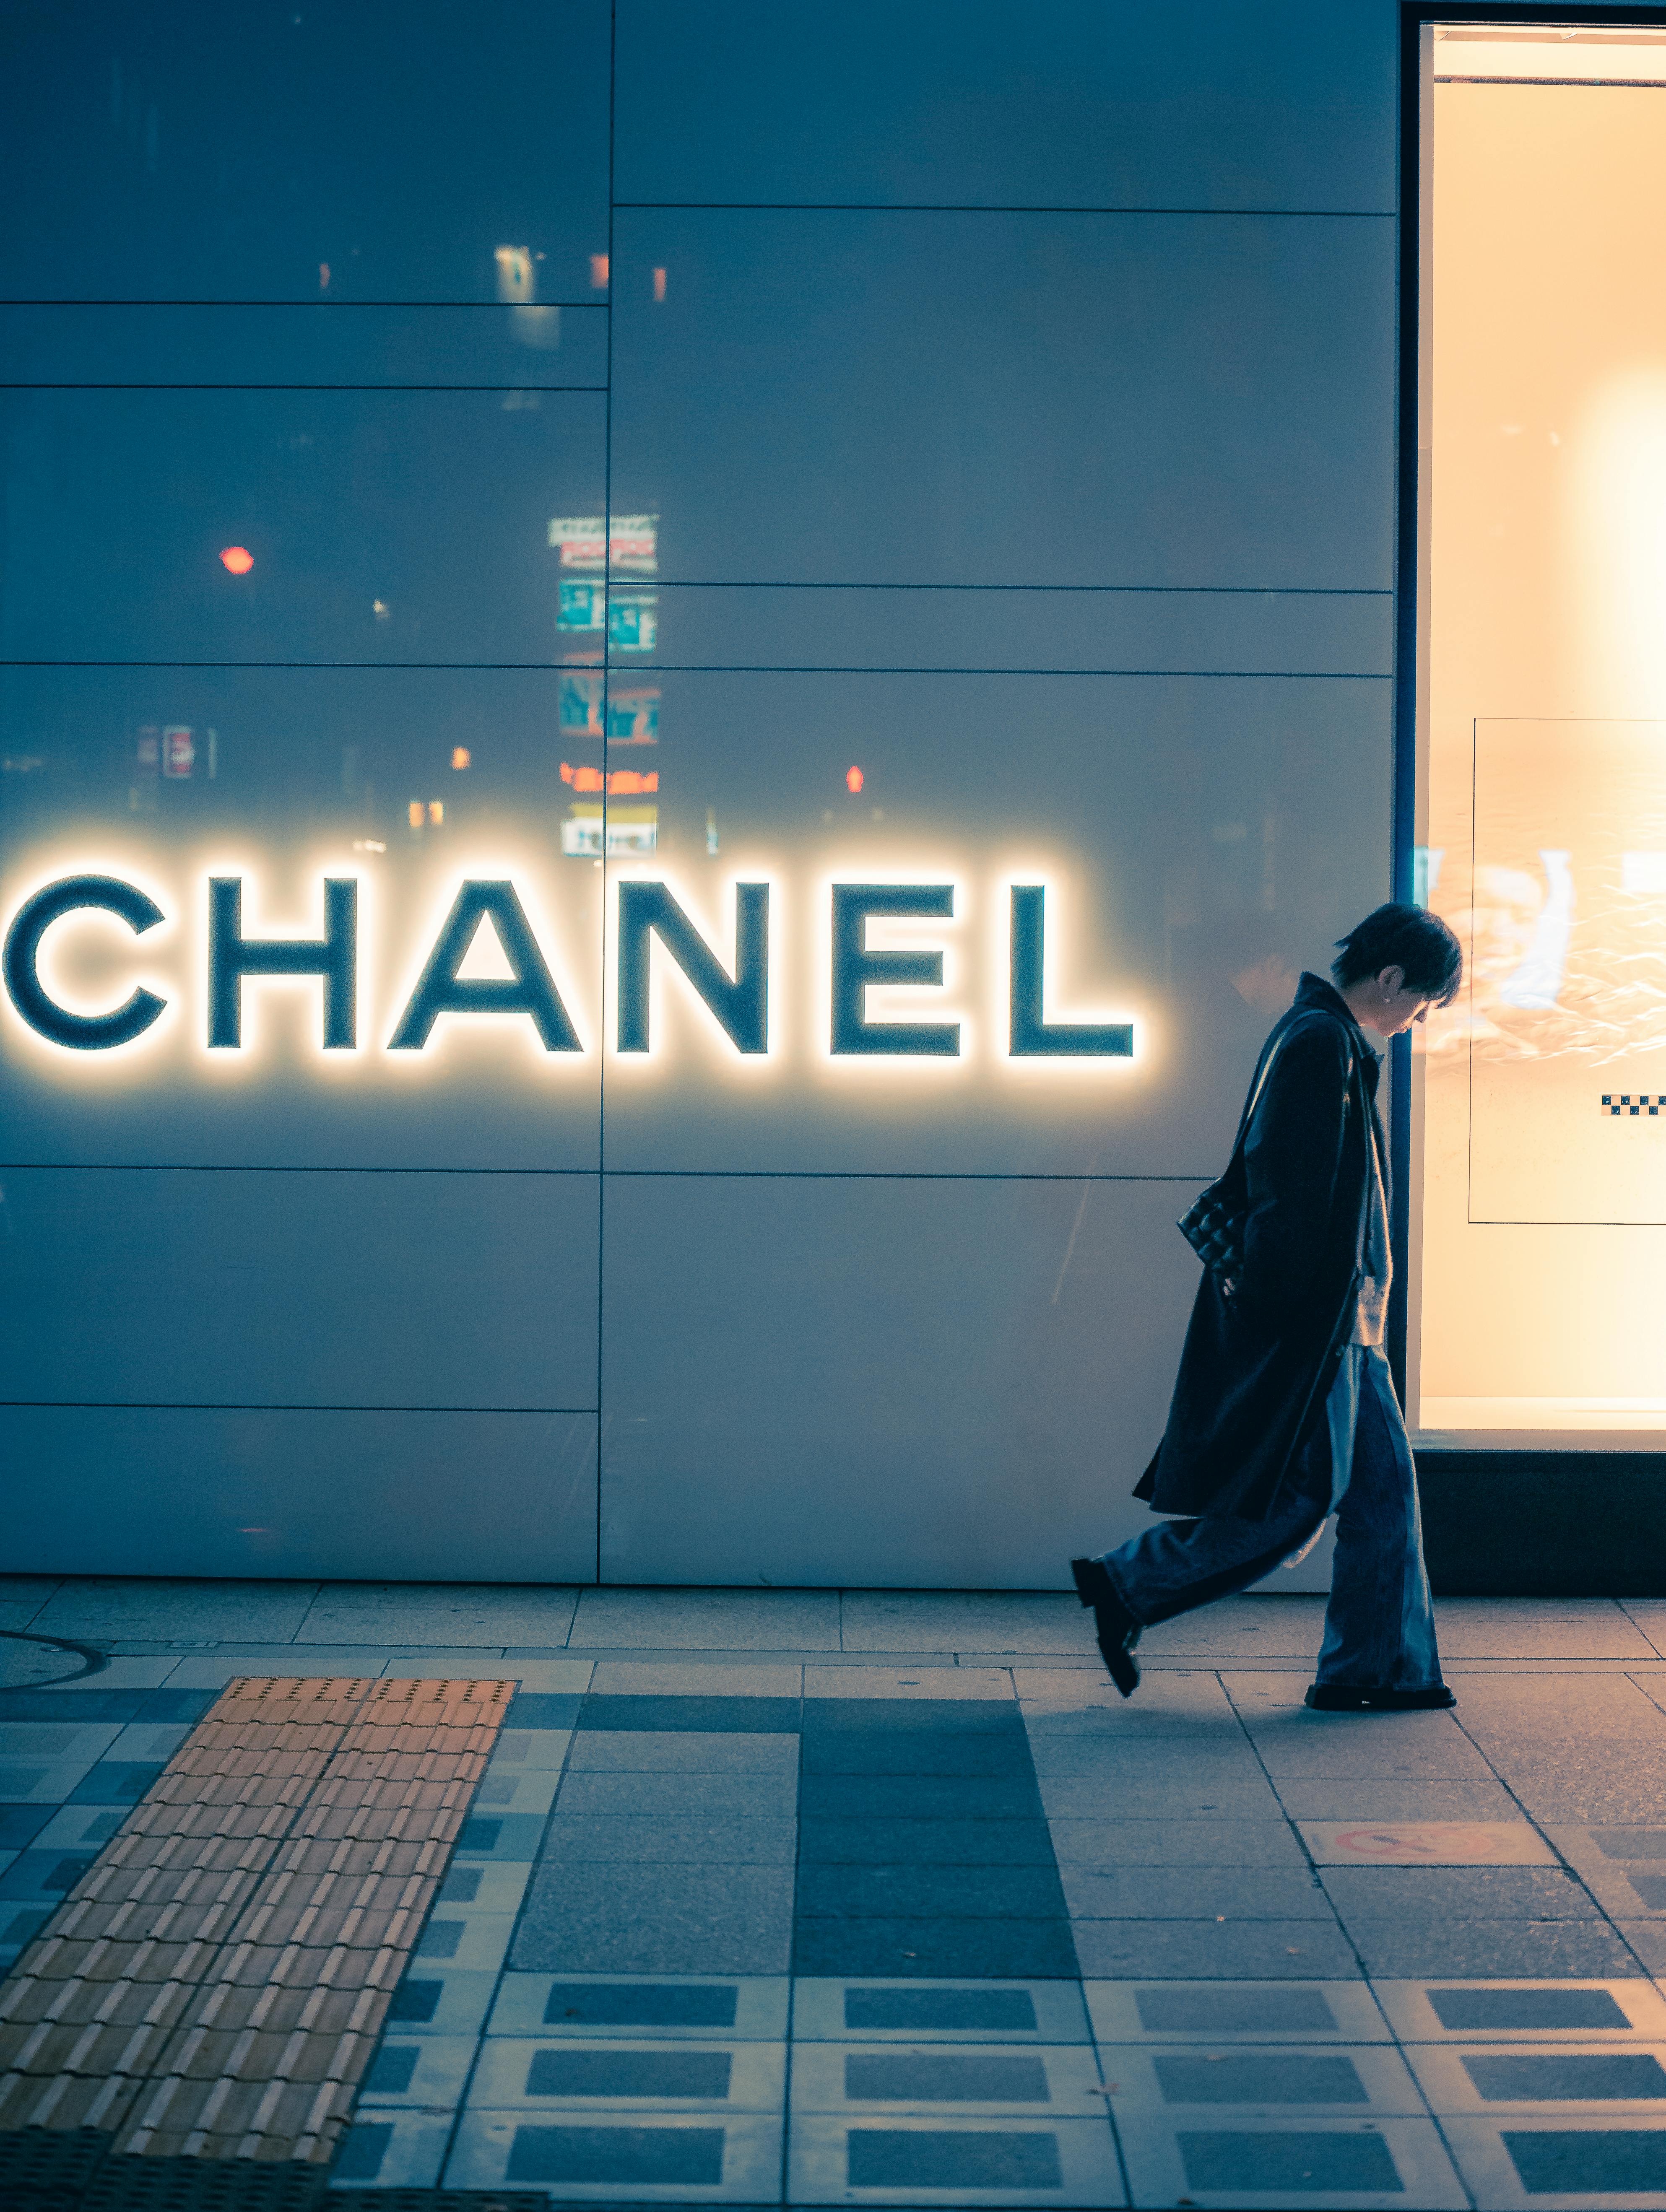 Bleu De Chanel Photos, Download The BEST Free Bleu De Chanel Stock